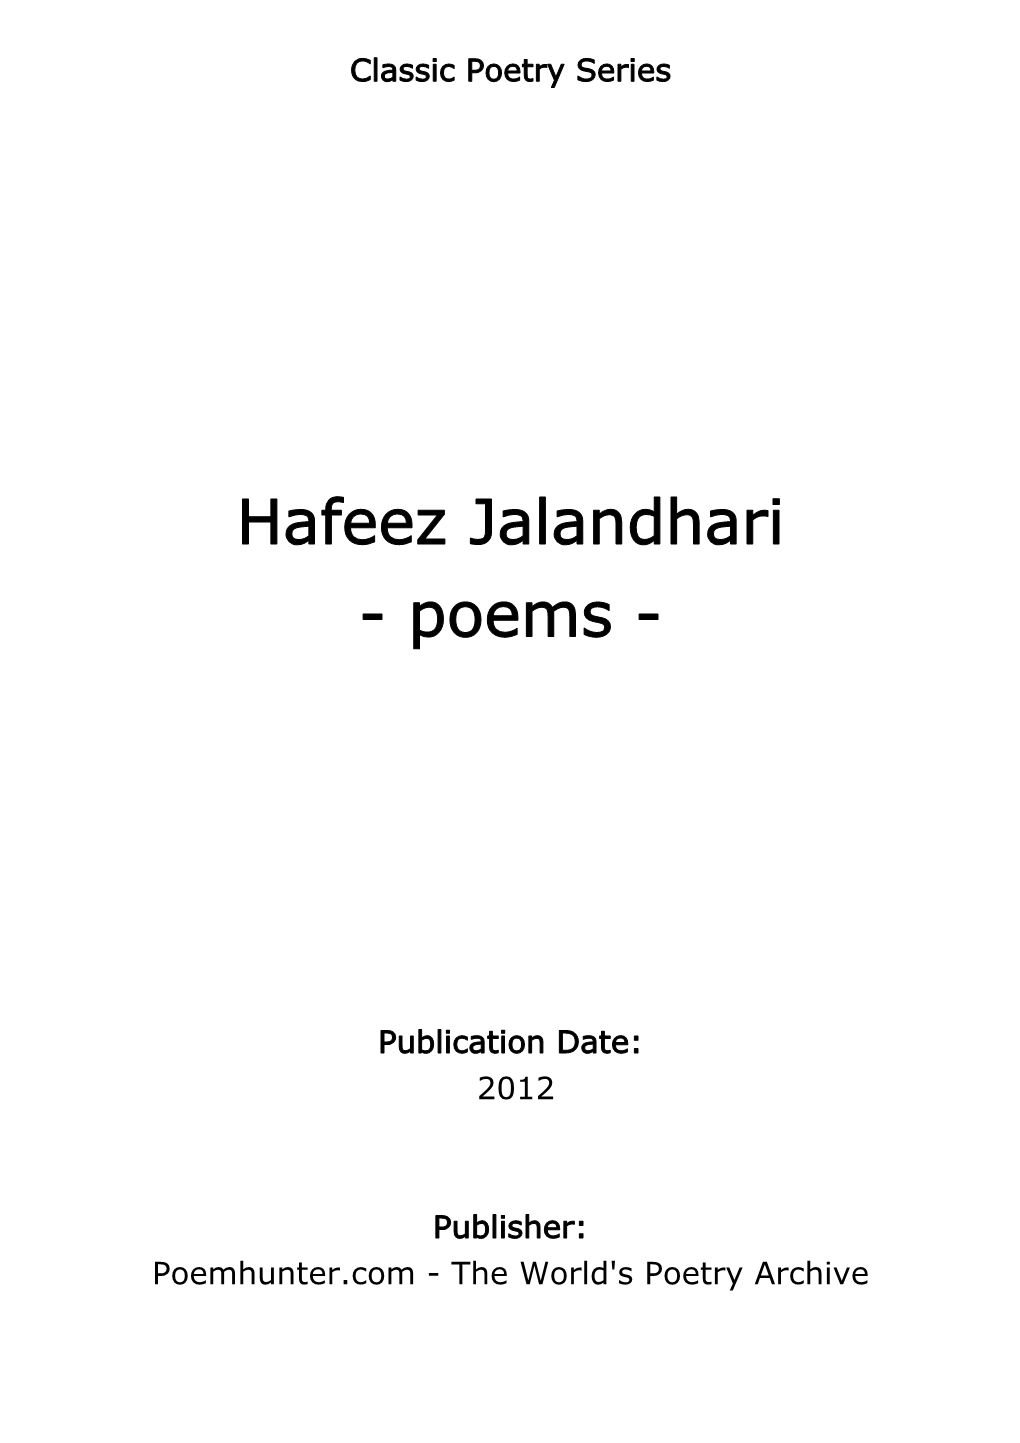 Hafeez Jalandhari - Poems